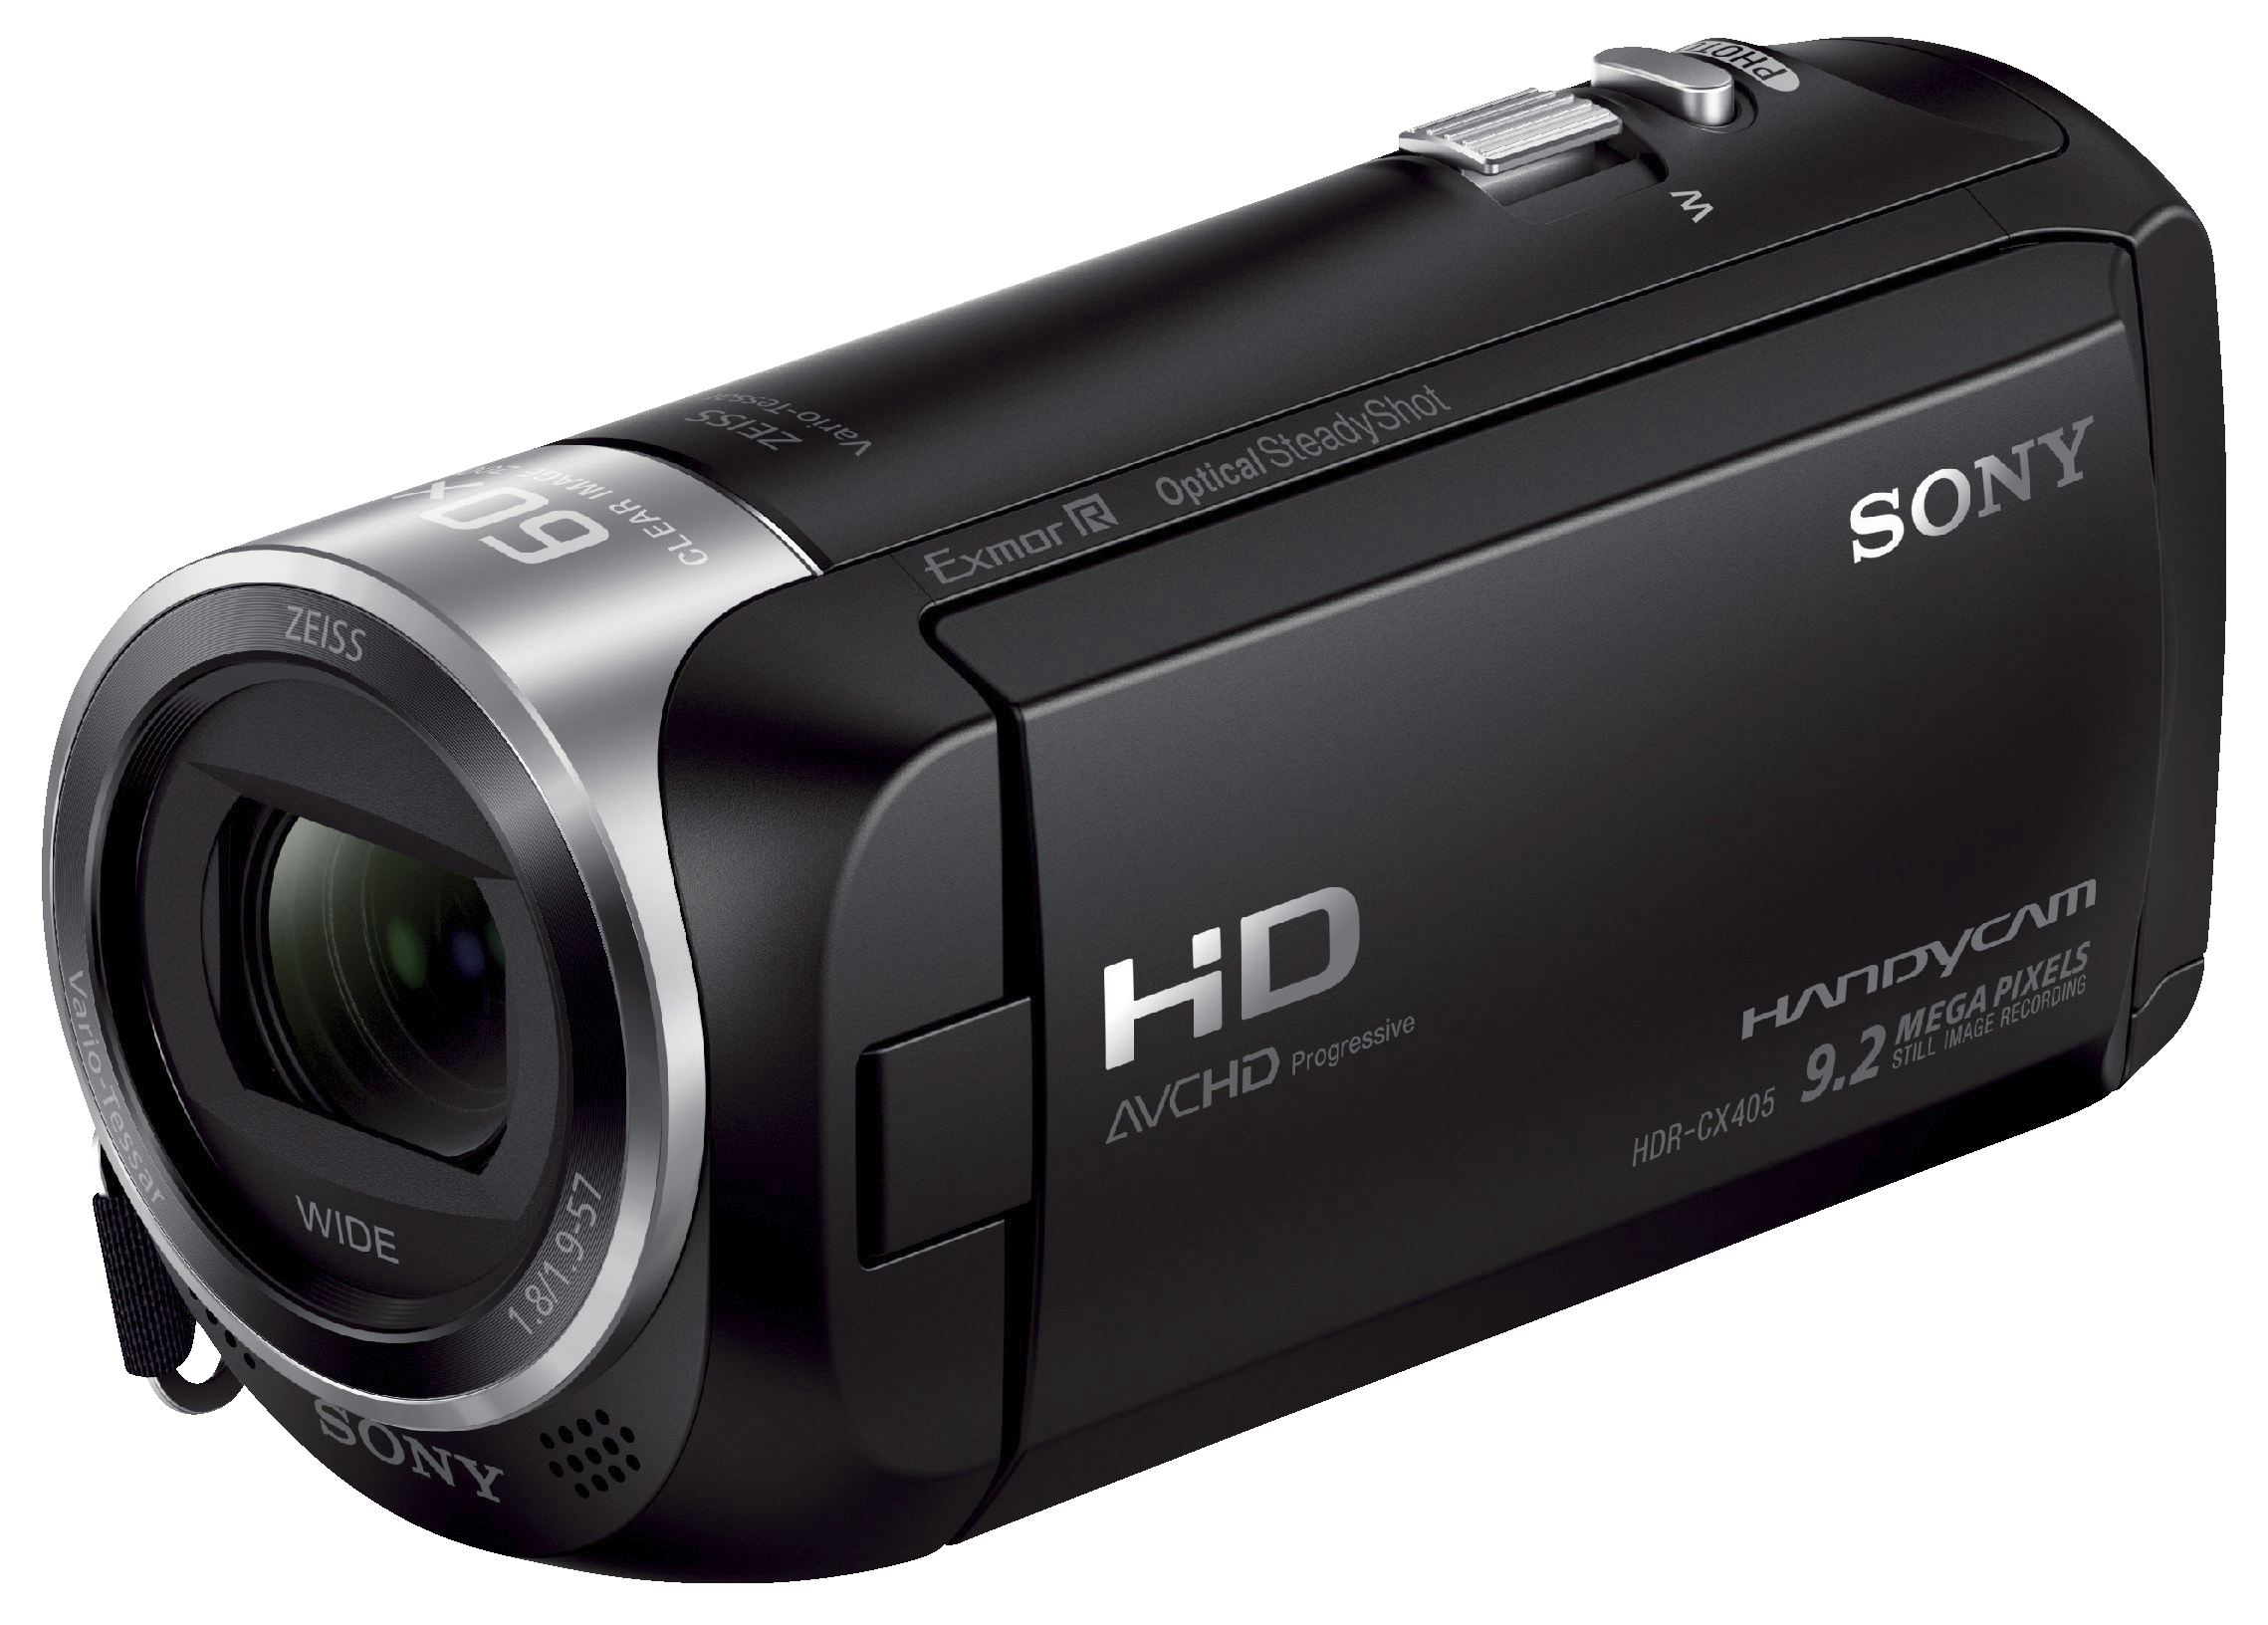 Sony Handycam HDR-CX405 videokamera (sort) - Videokamera - Elkjøp